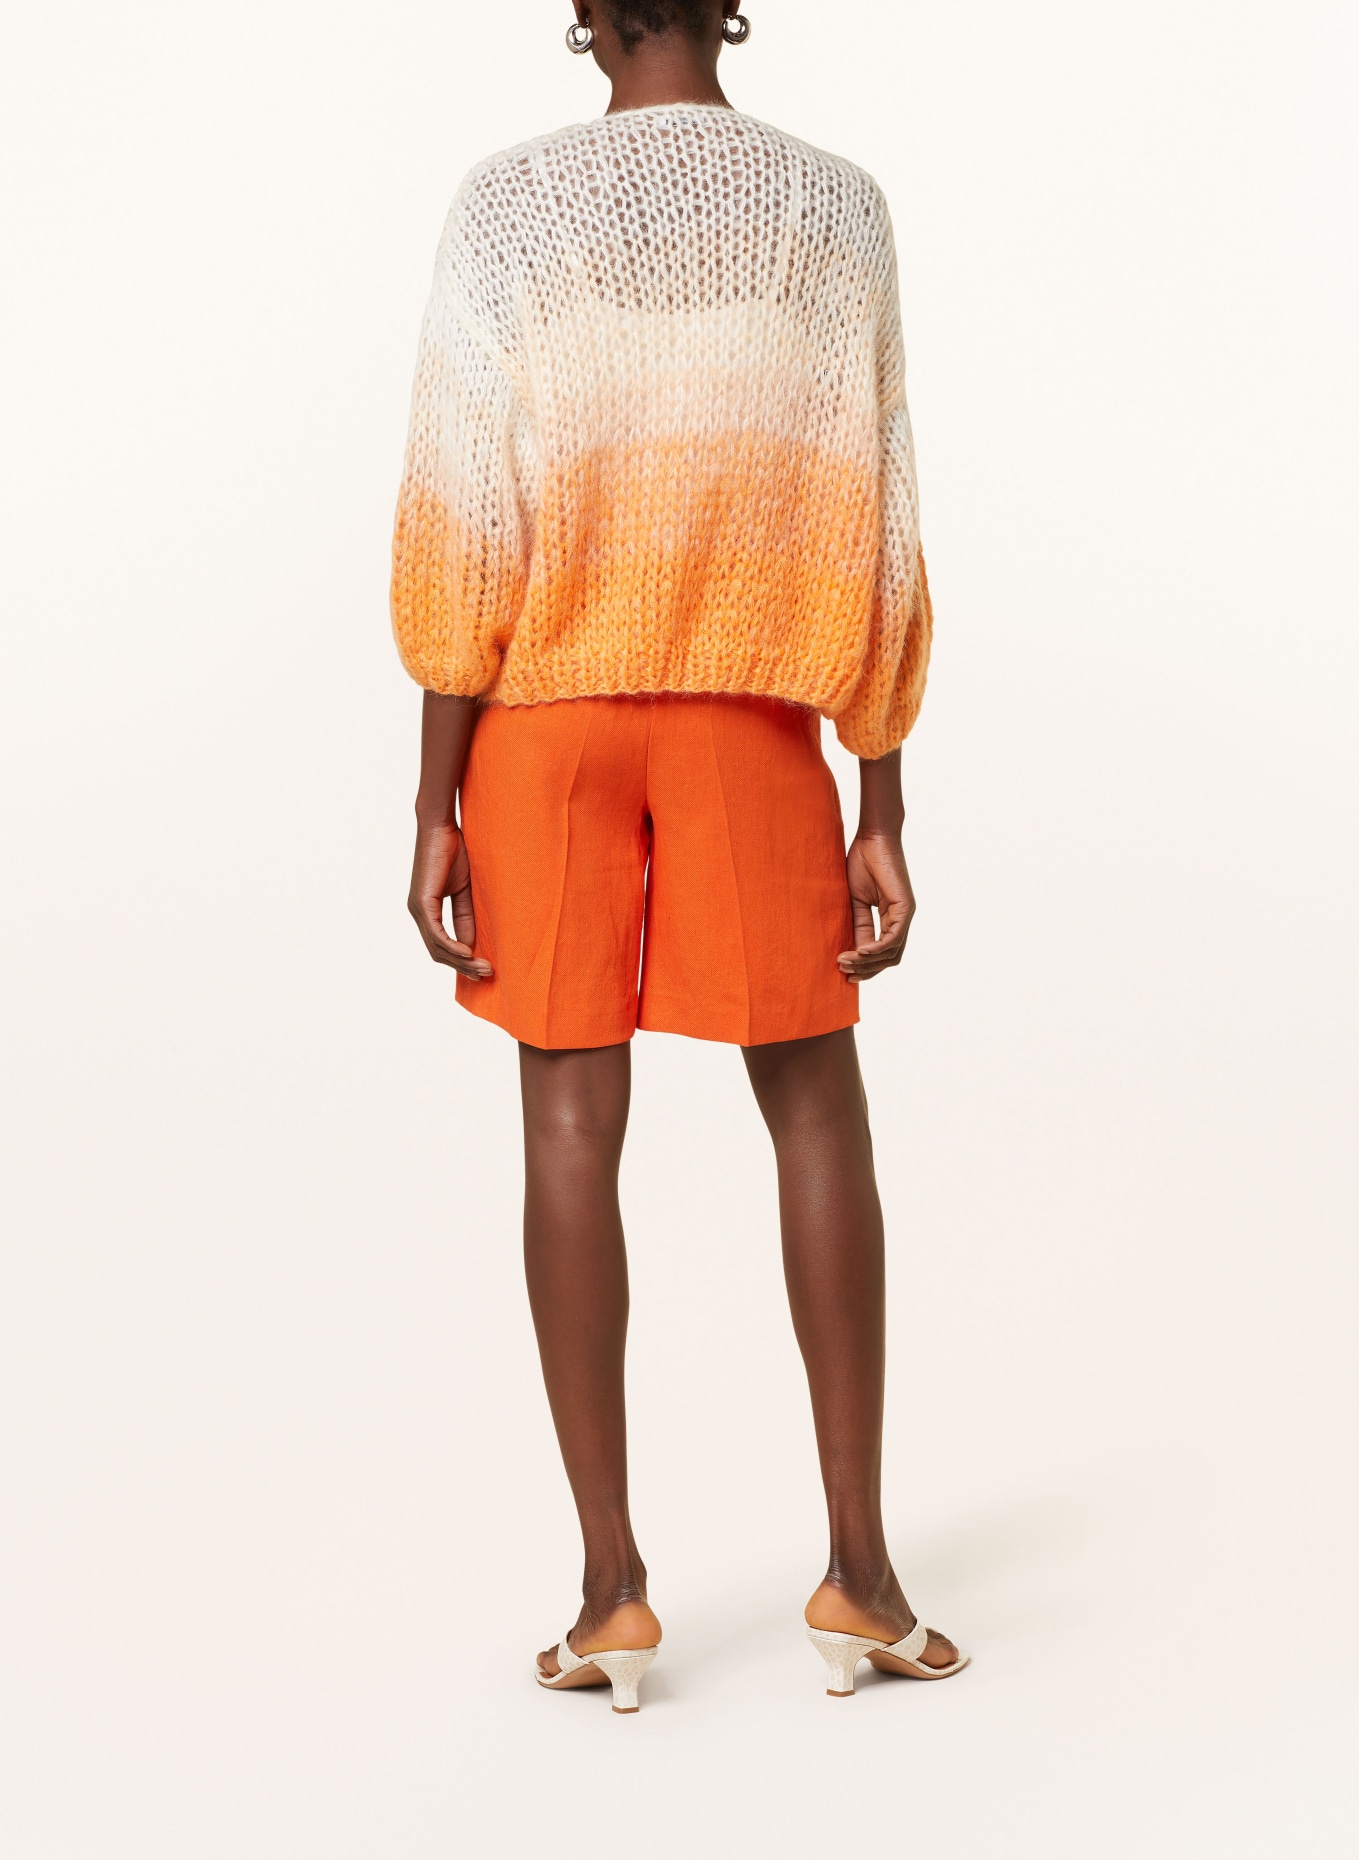 MAIAMI Knit cardigan with mohair, Color: CREAM/ BEIGE/ ORANGE (Image 3)